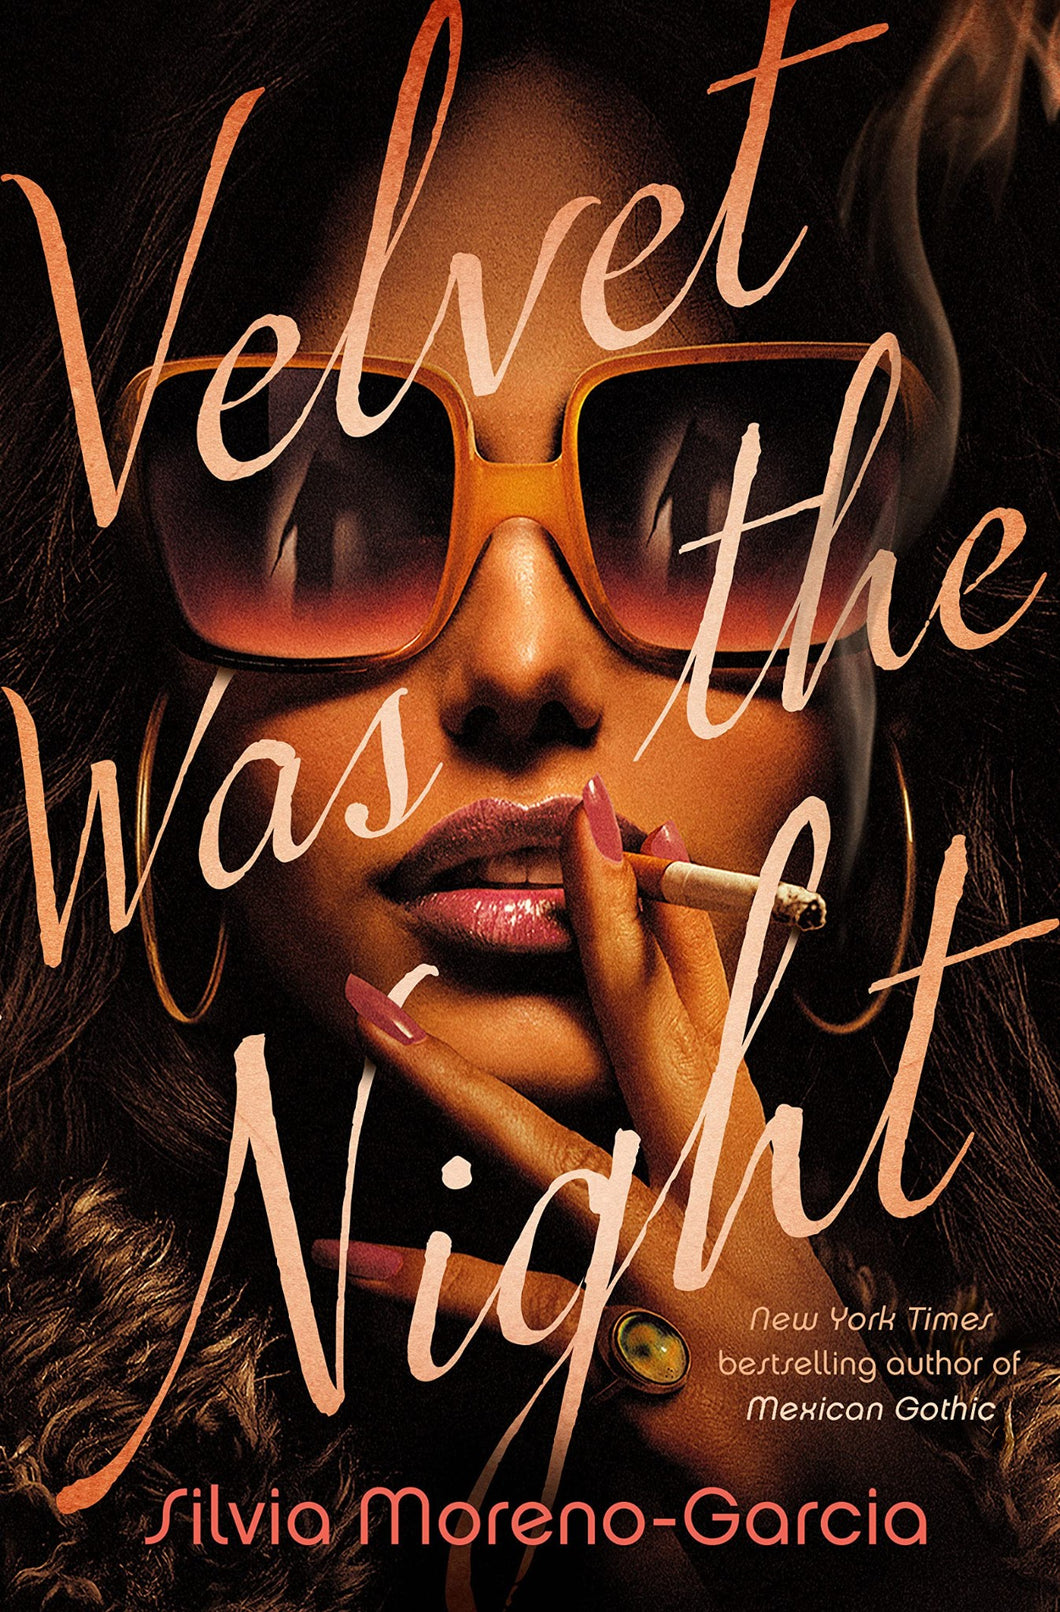 Velvet Was the Night by Silvia Moreno-Garcia Hardcover Hardback Novel Book